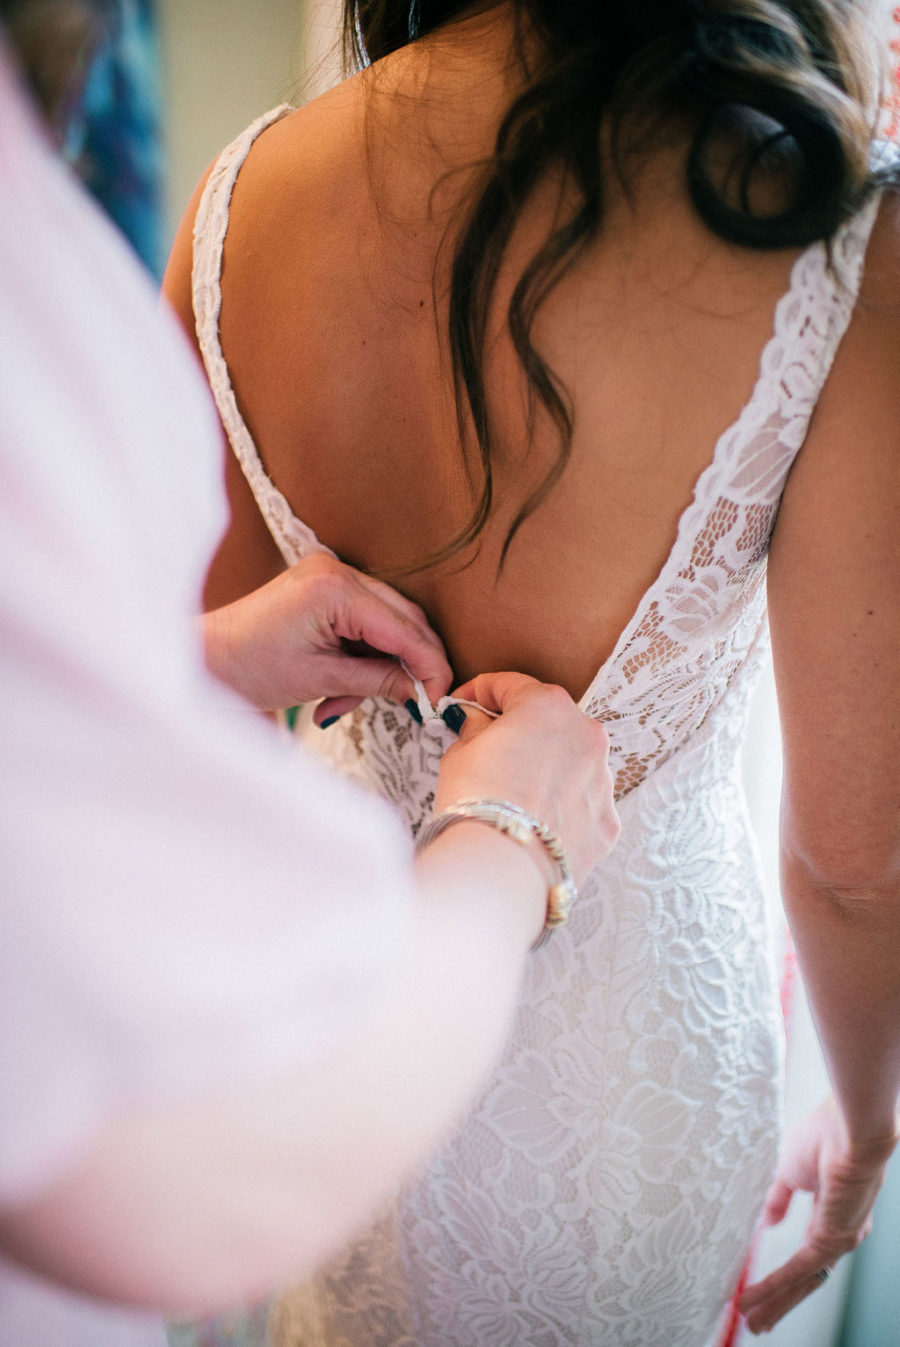 Lace wedding dress details for Intimate Nashville wedding